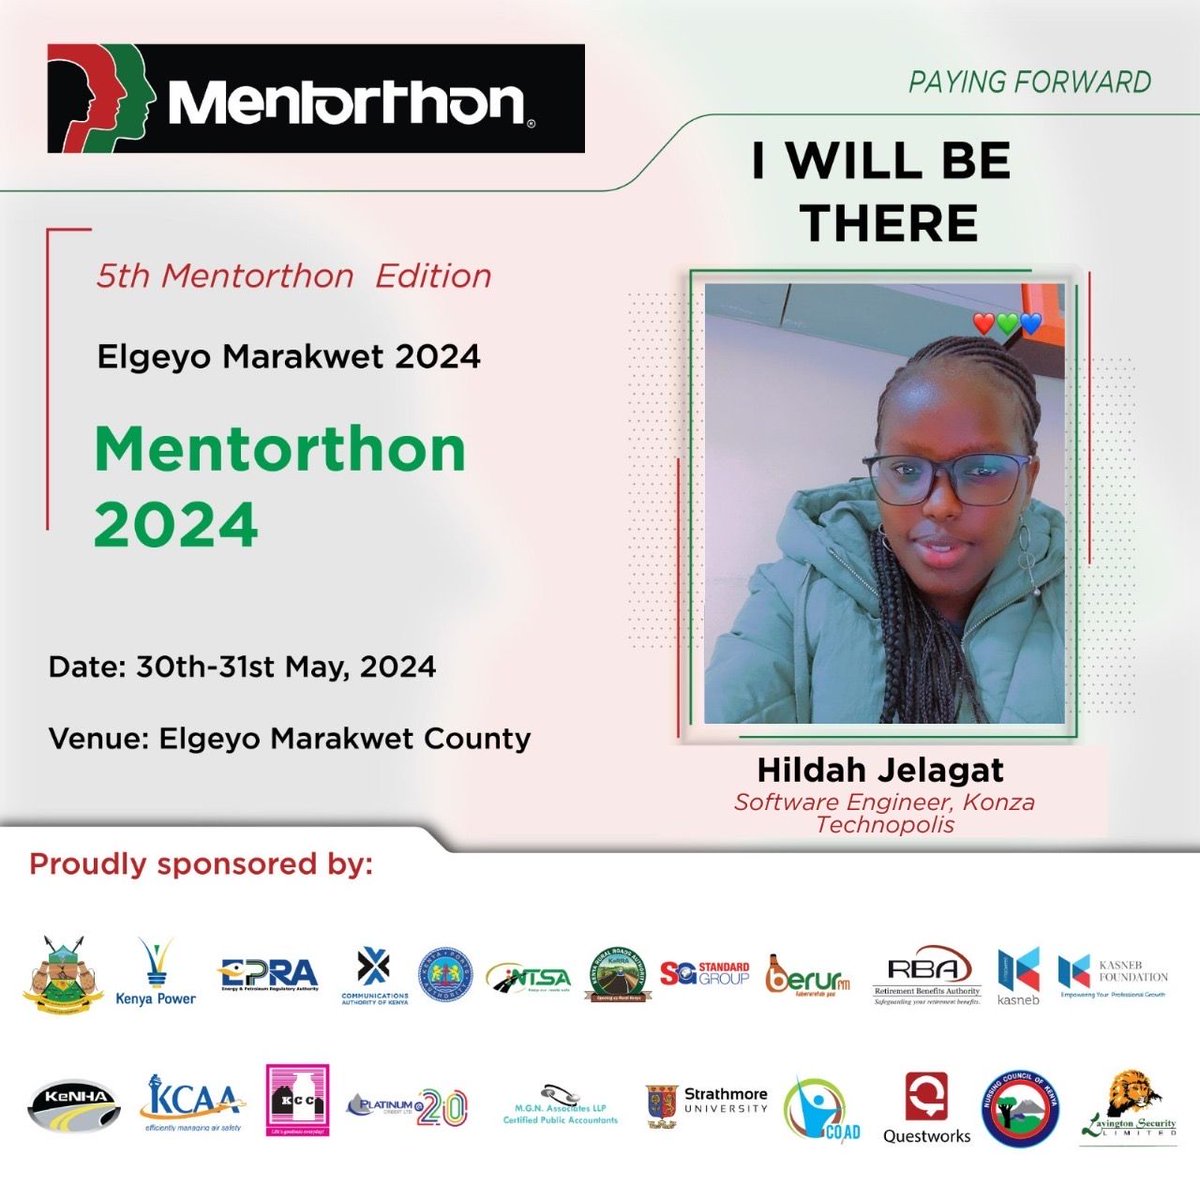 See you at Mentorthon 2024!

#mentorthon #payfoward